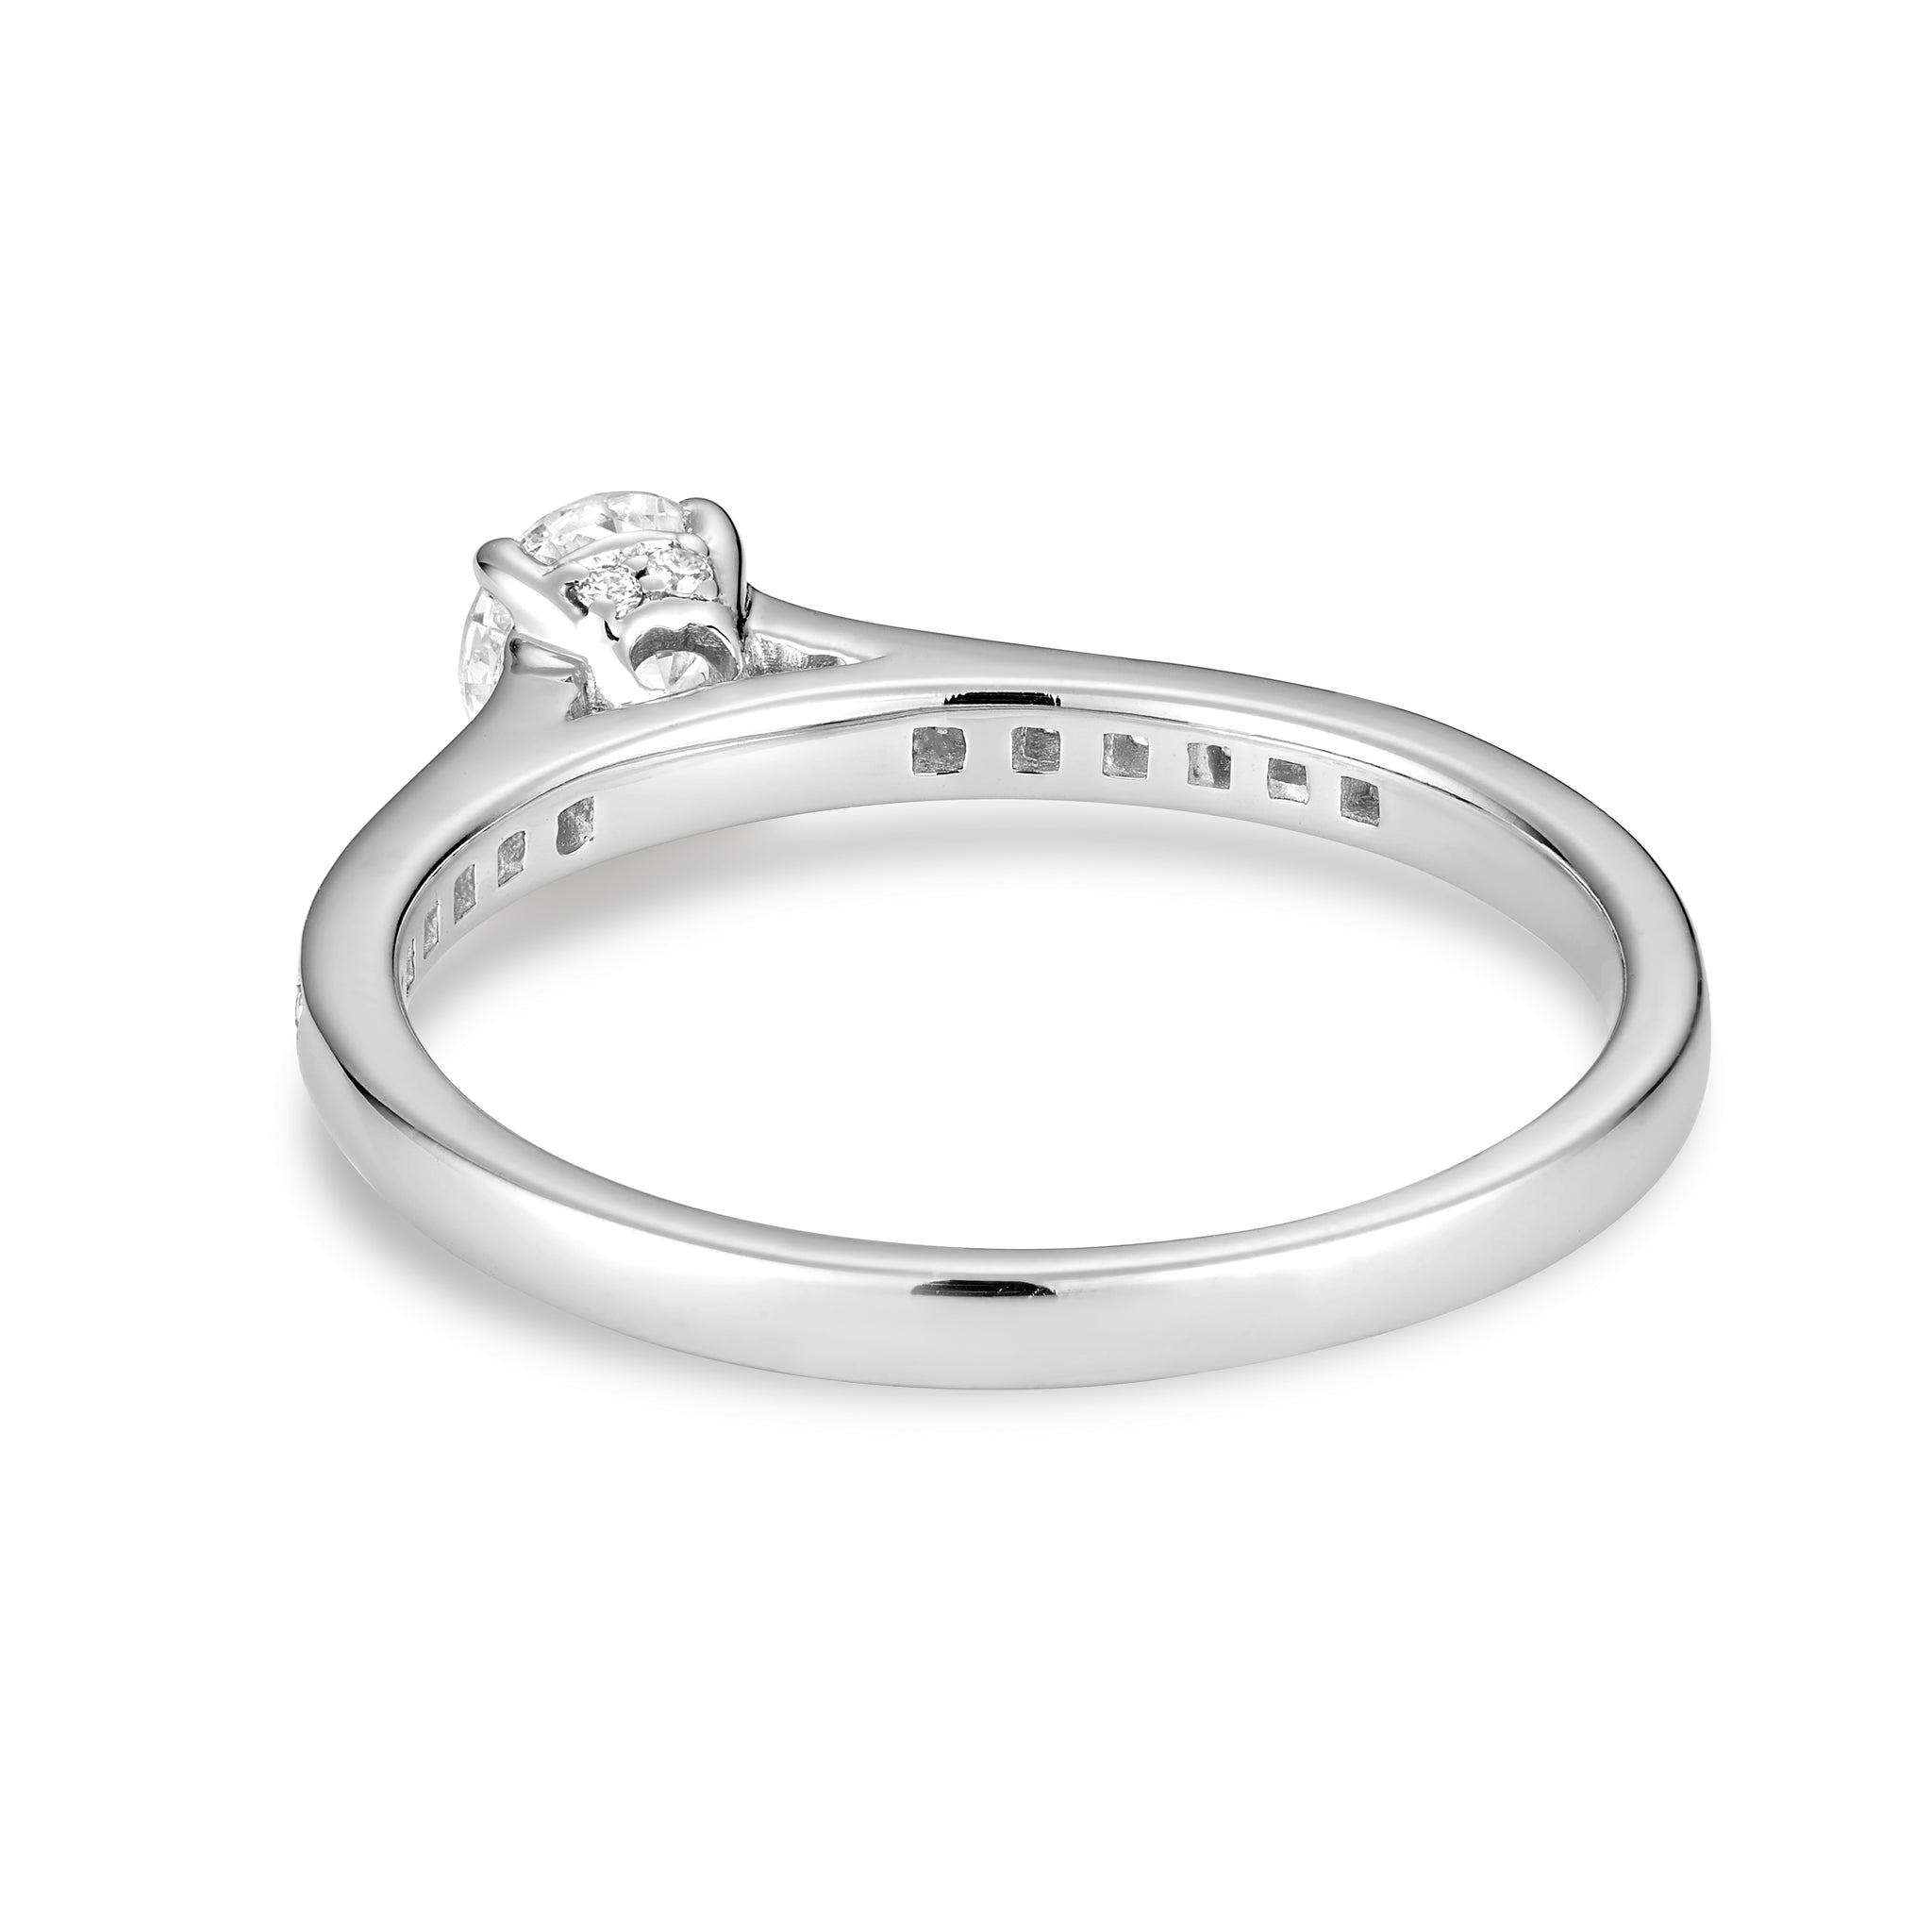 Hemsleys Collection 14K Round Diamond Engagement Ring